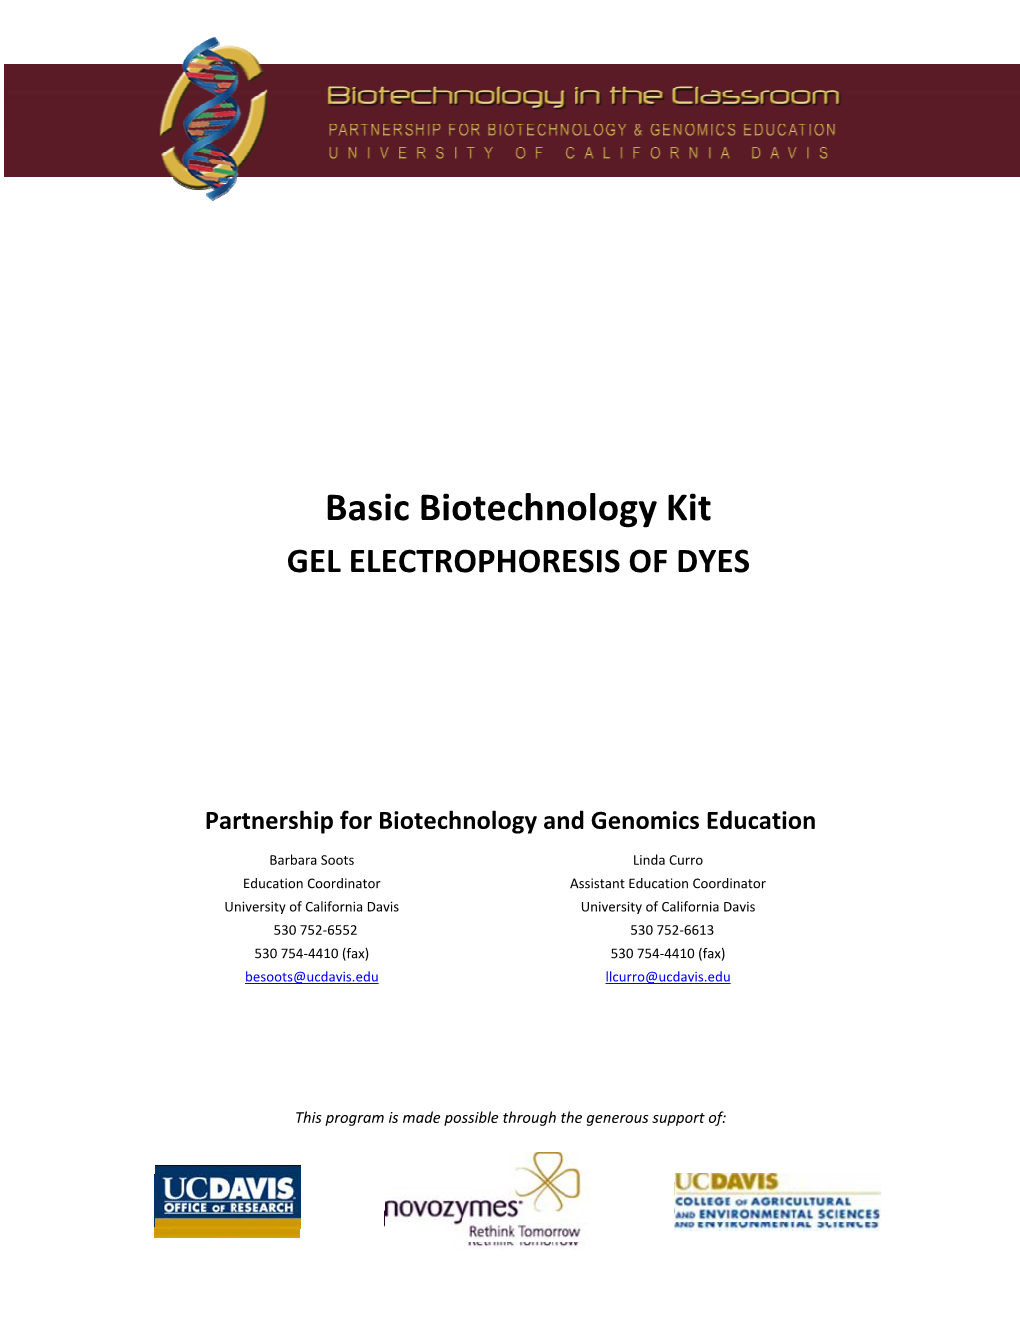 Basic Biotechnology Kit GEL ELECTROPHORESIS of DYES